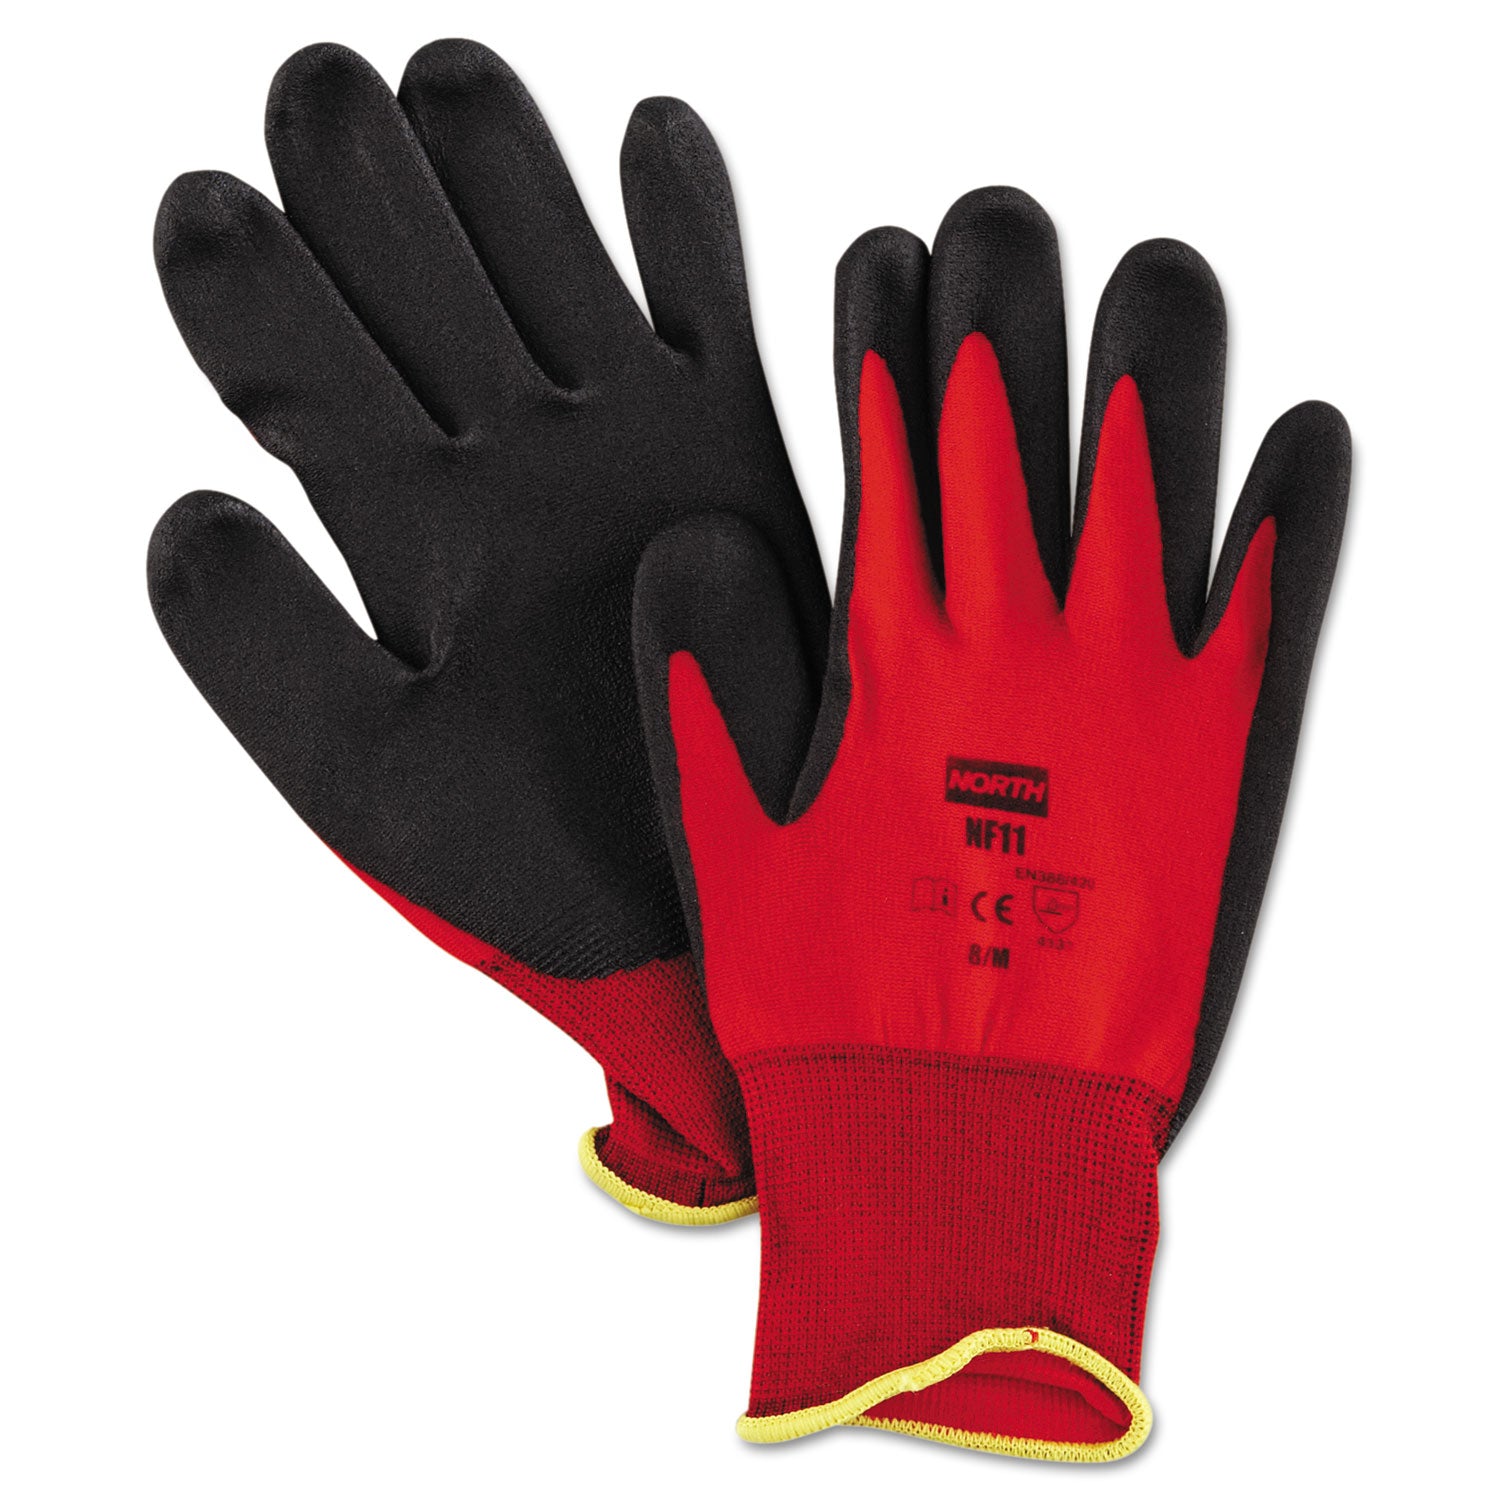 northflex-red-foamed-pvc-palm-coated-gloves-medium-dozen_nspnf118m - 1